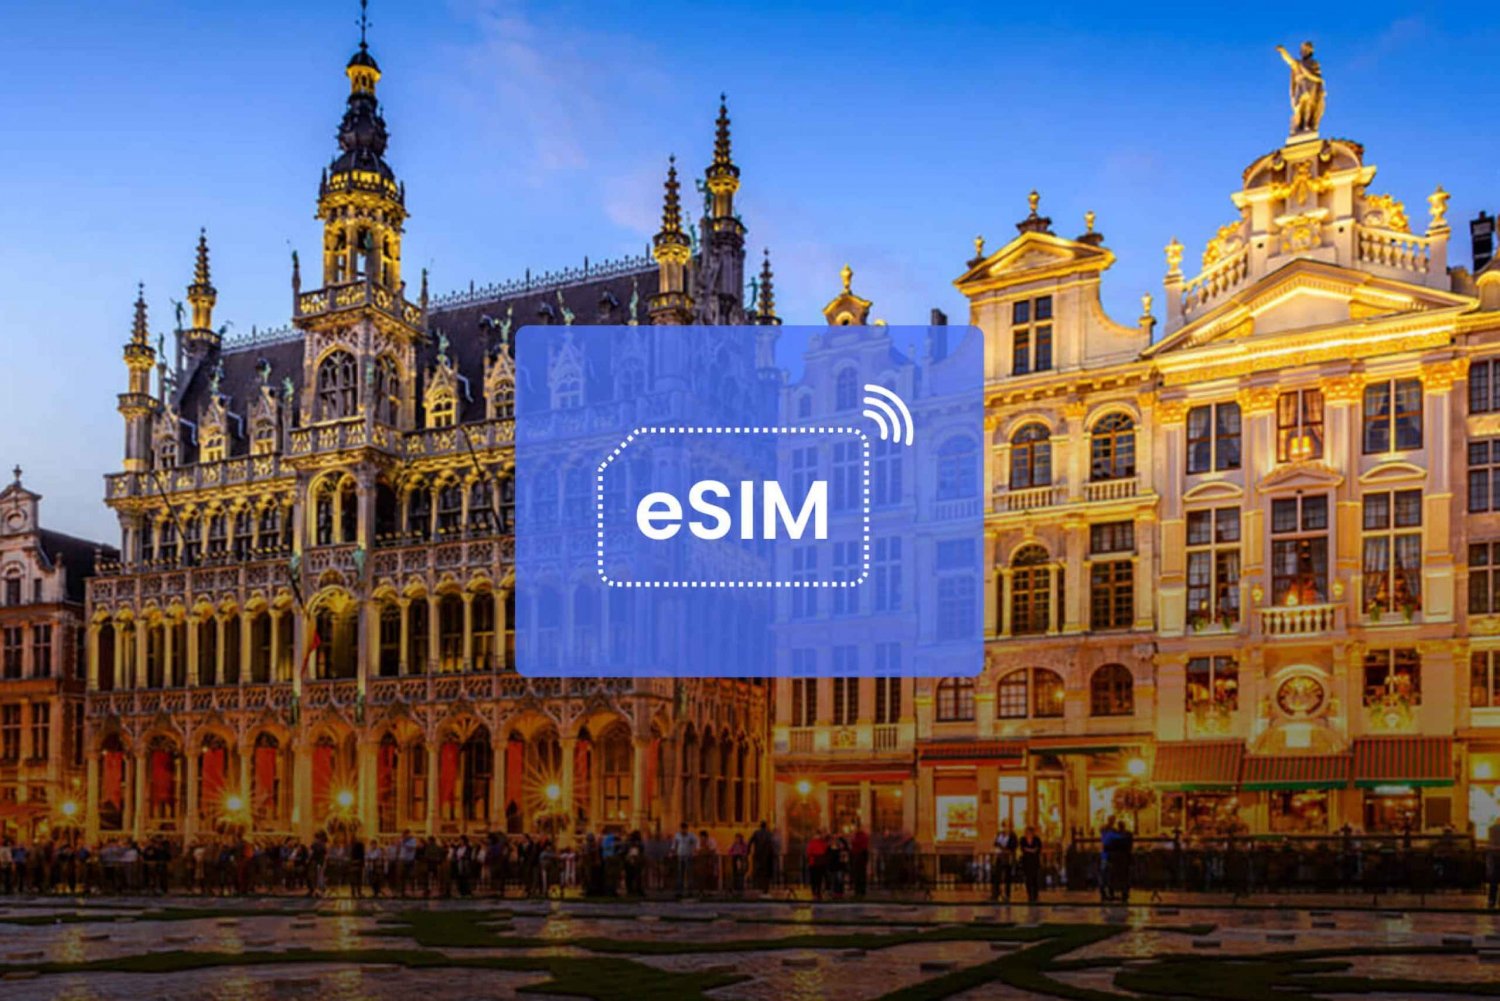 Brussels: Belgium/ Europe eSIM Roaming Mobile Data Plan